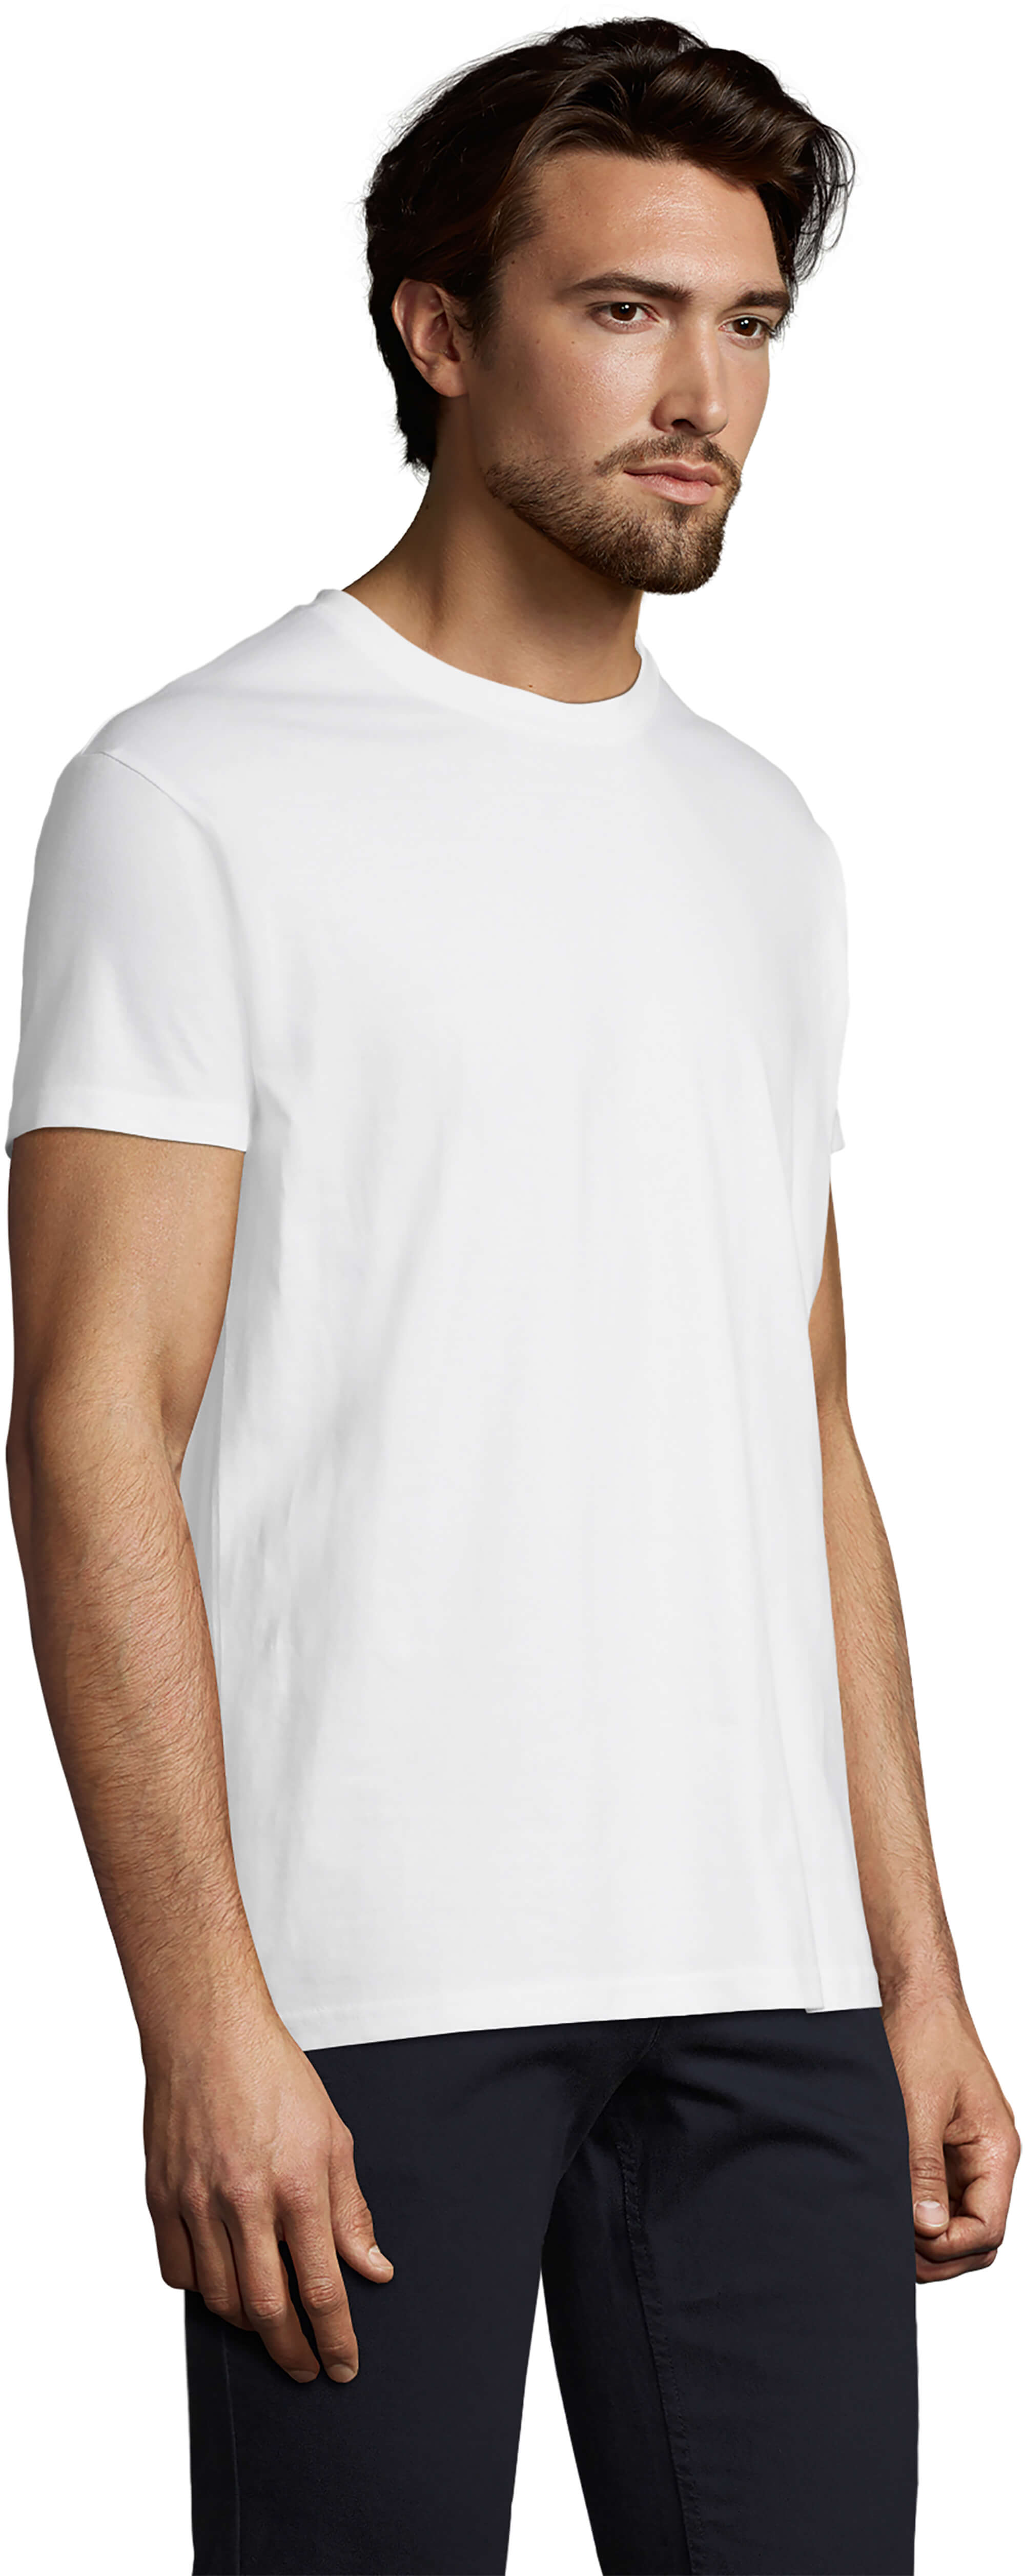 Men's Graphic T-Shirt All Star Basketball Player Vintage White Round Neck